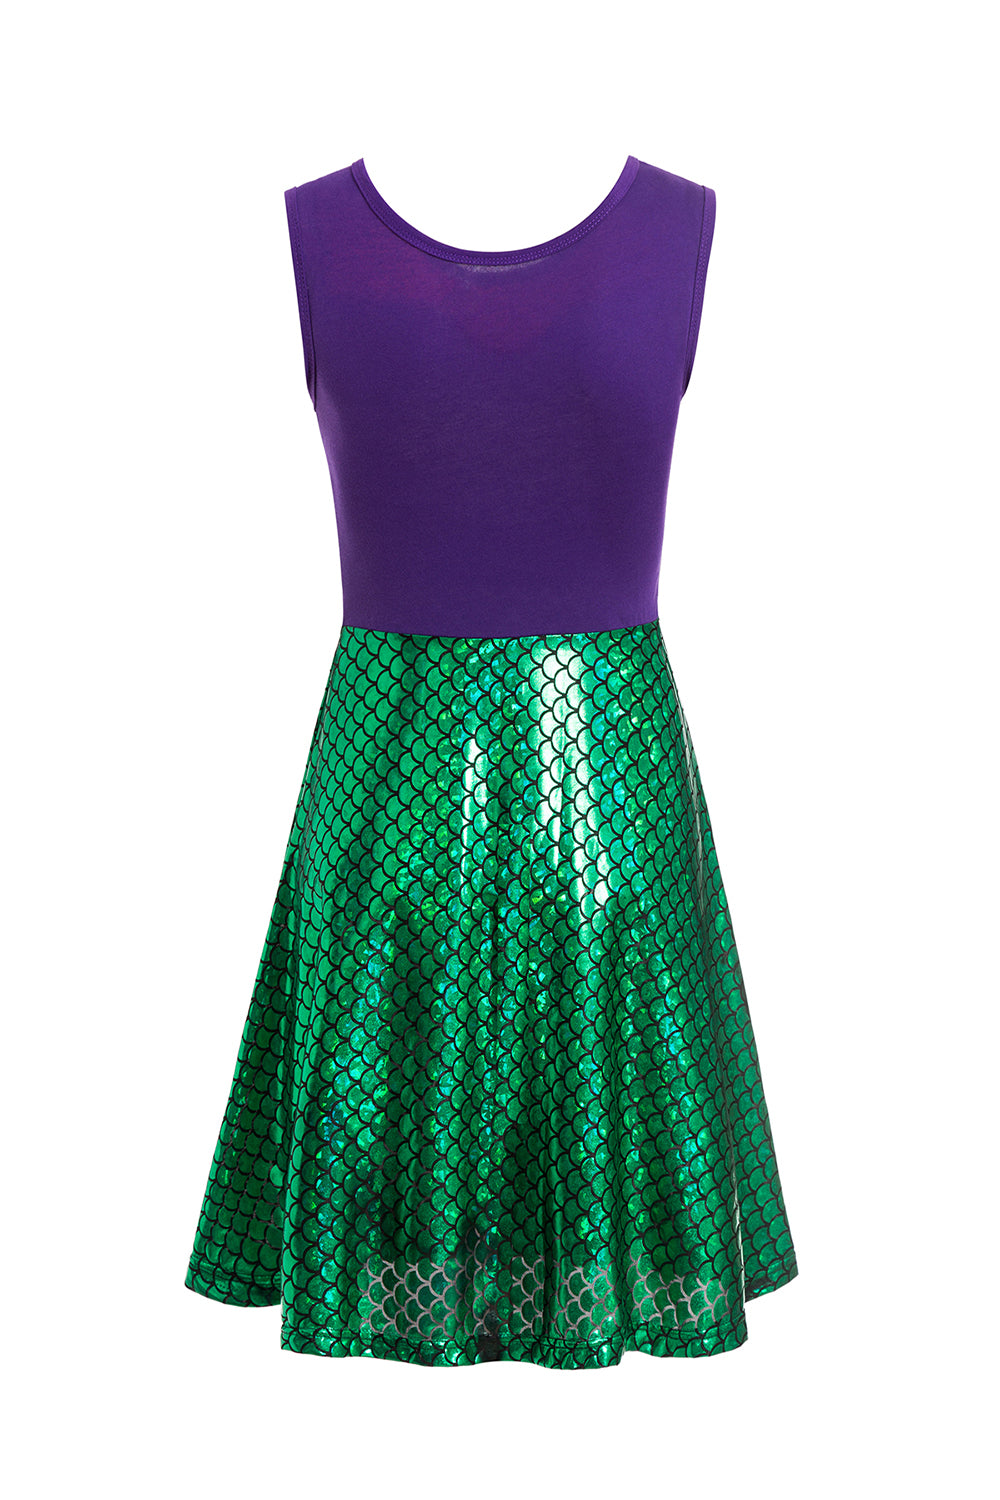 Adult Ariel Princess inspired fancy dress